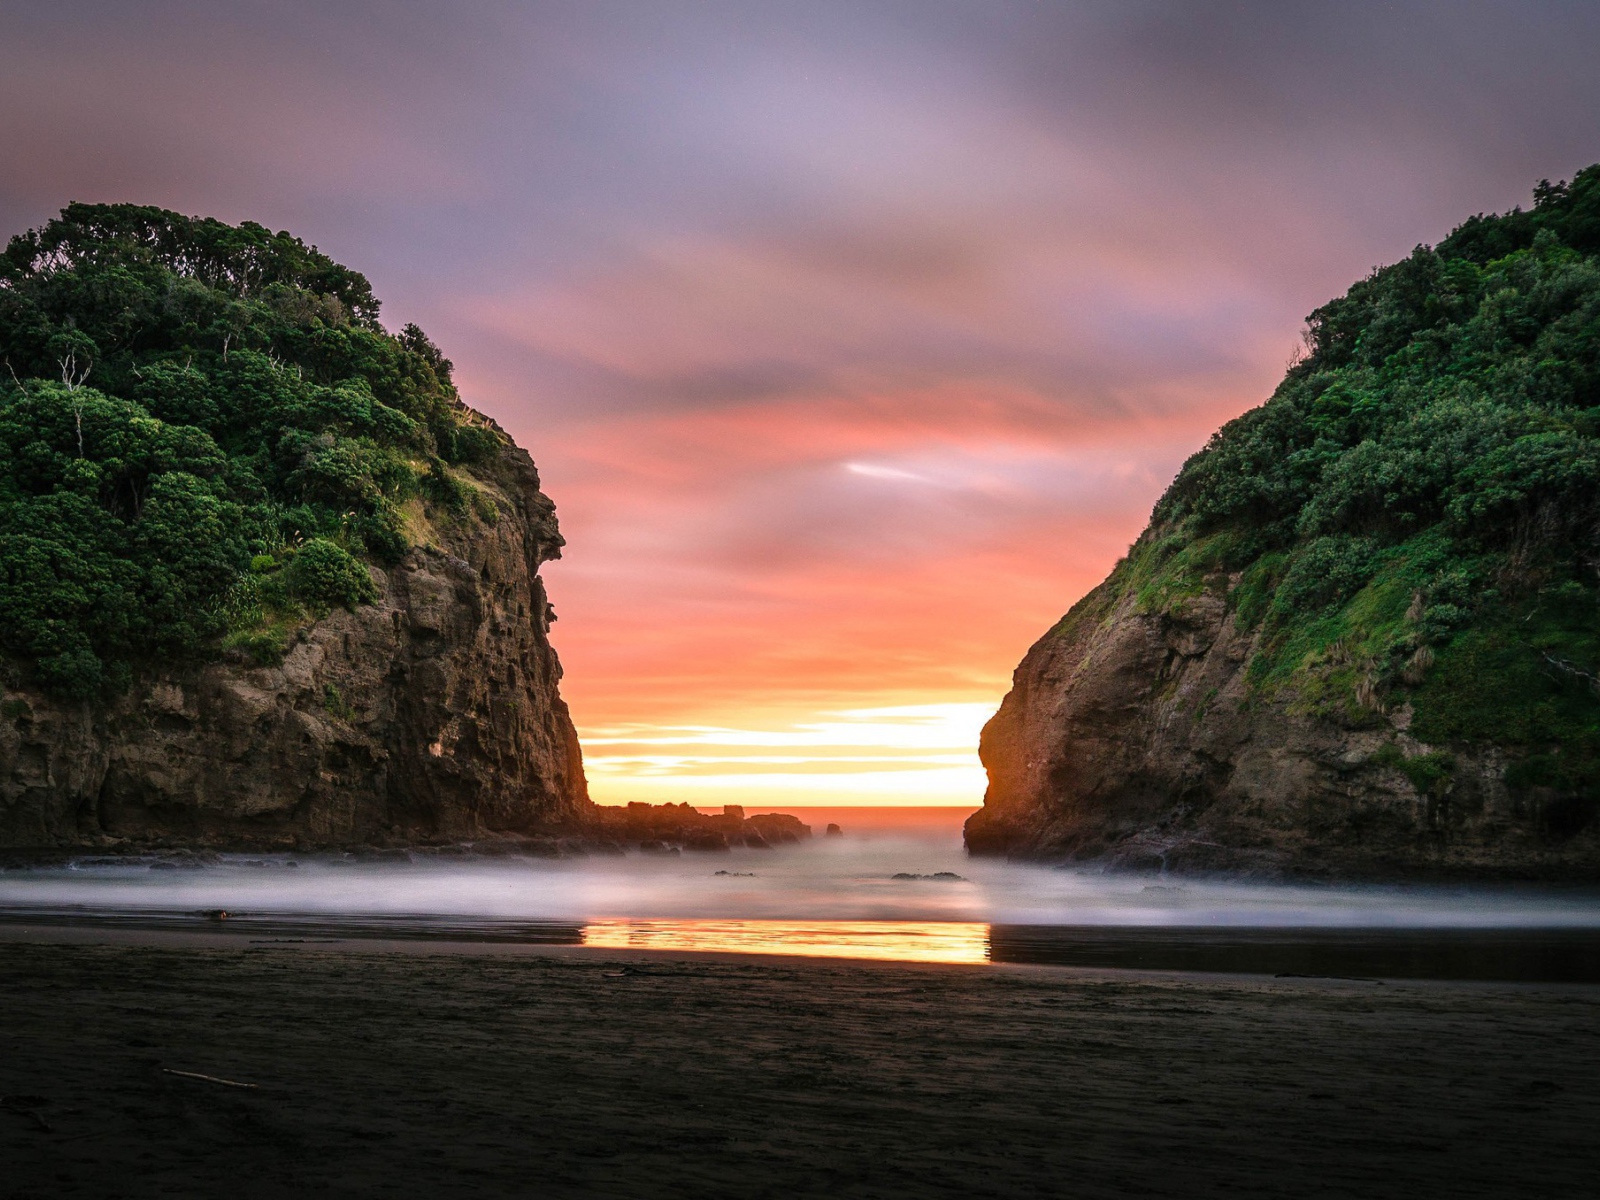 Beautiful sunset between rocks in New Zealand